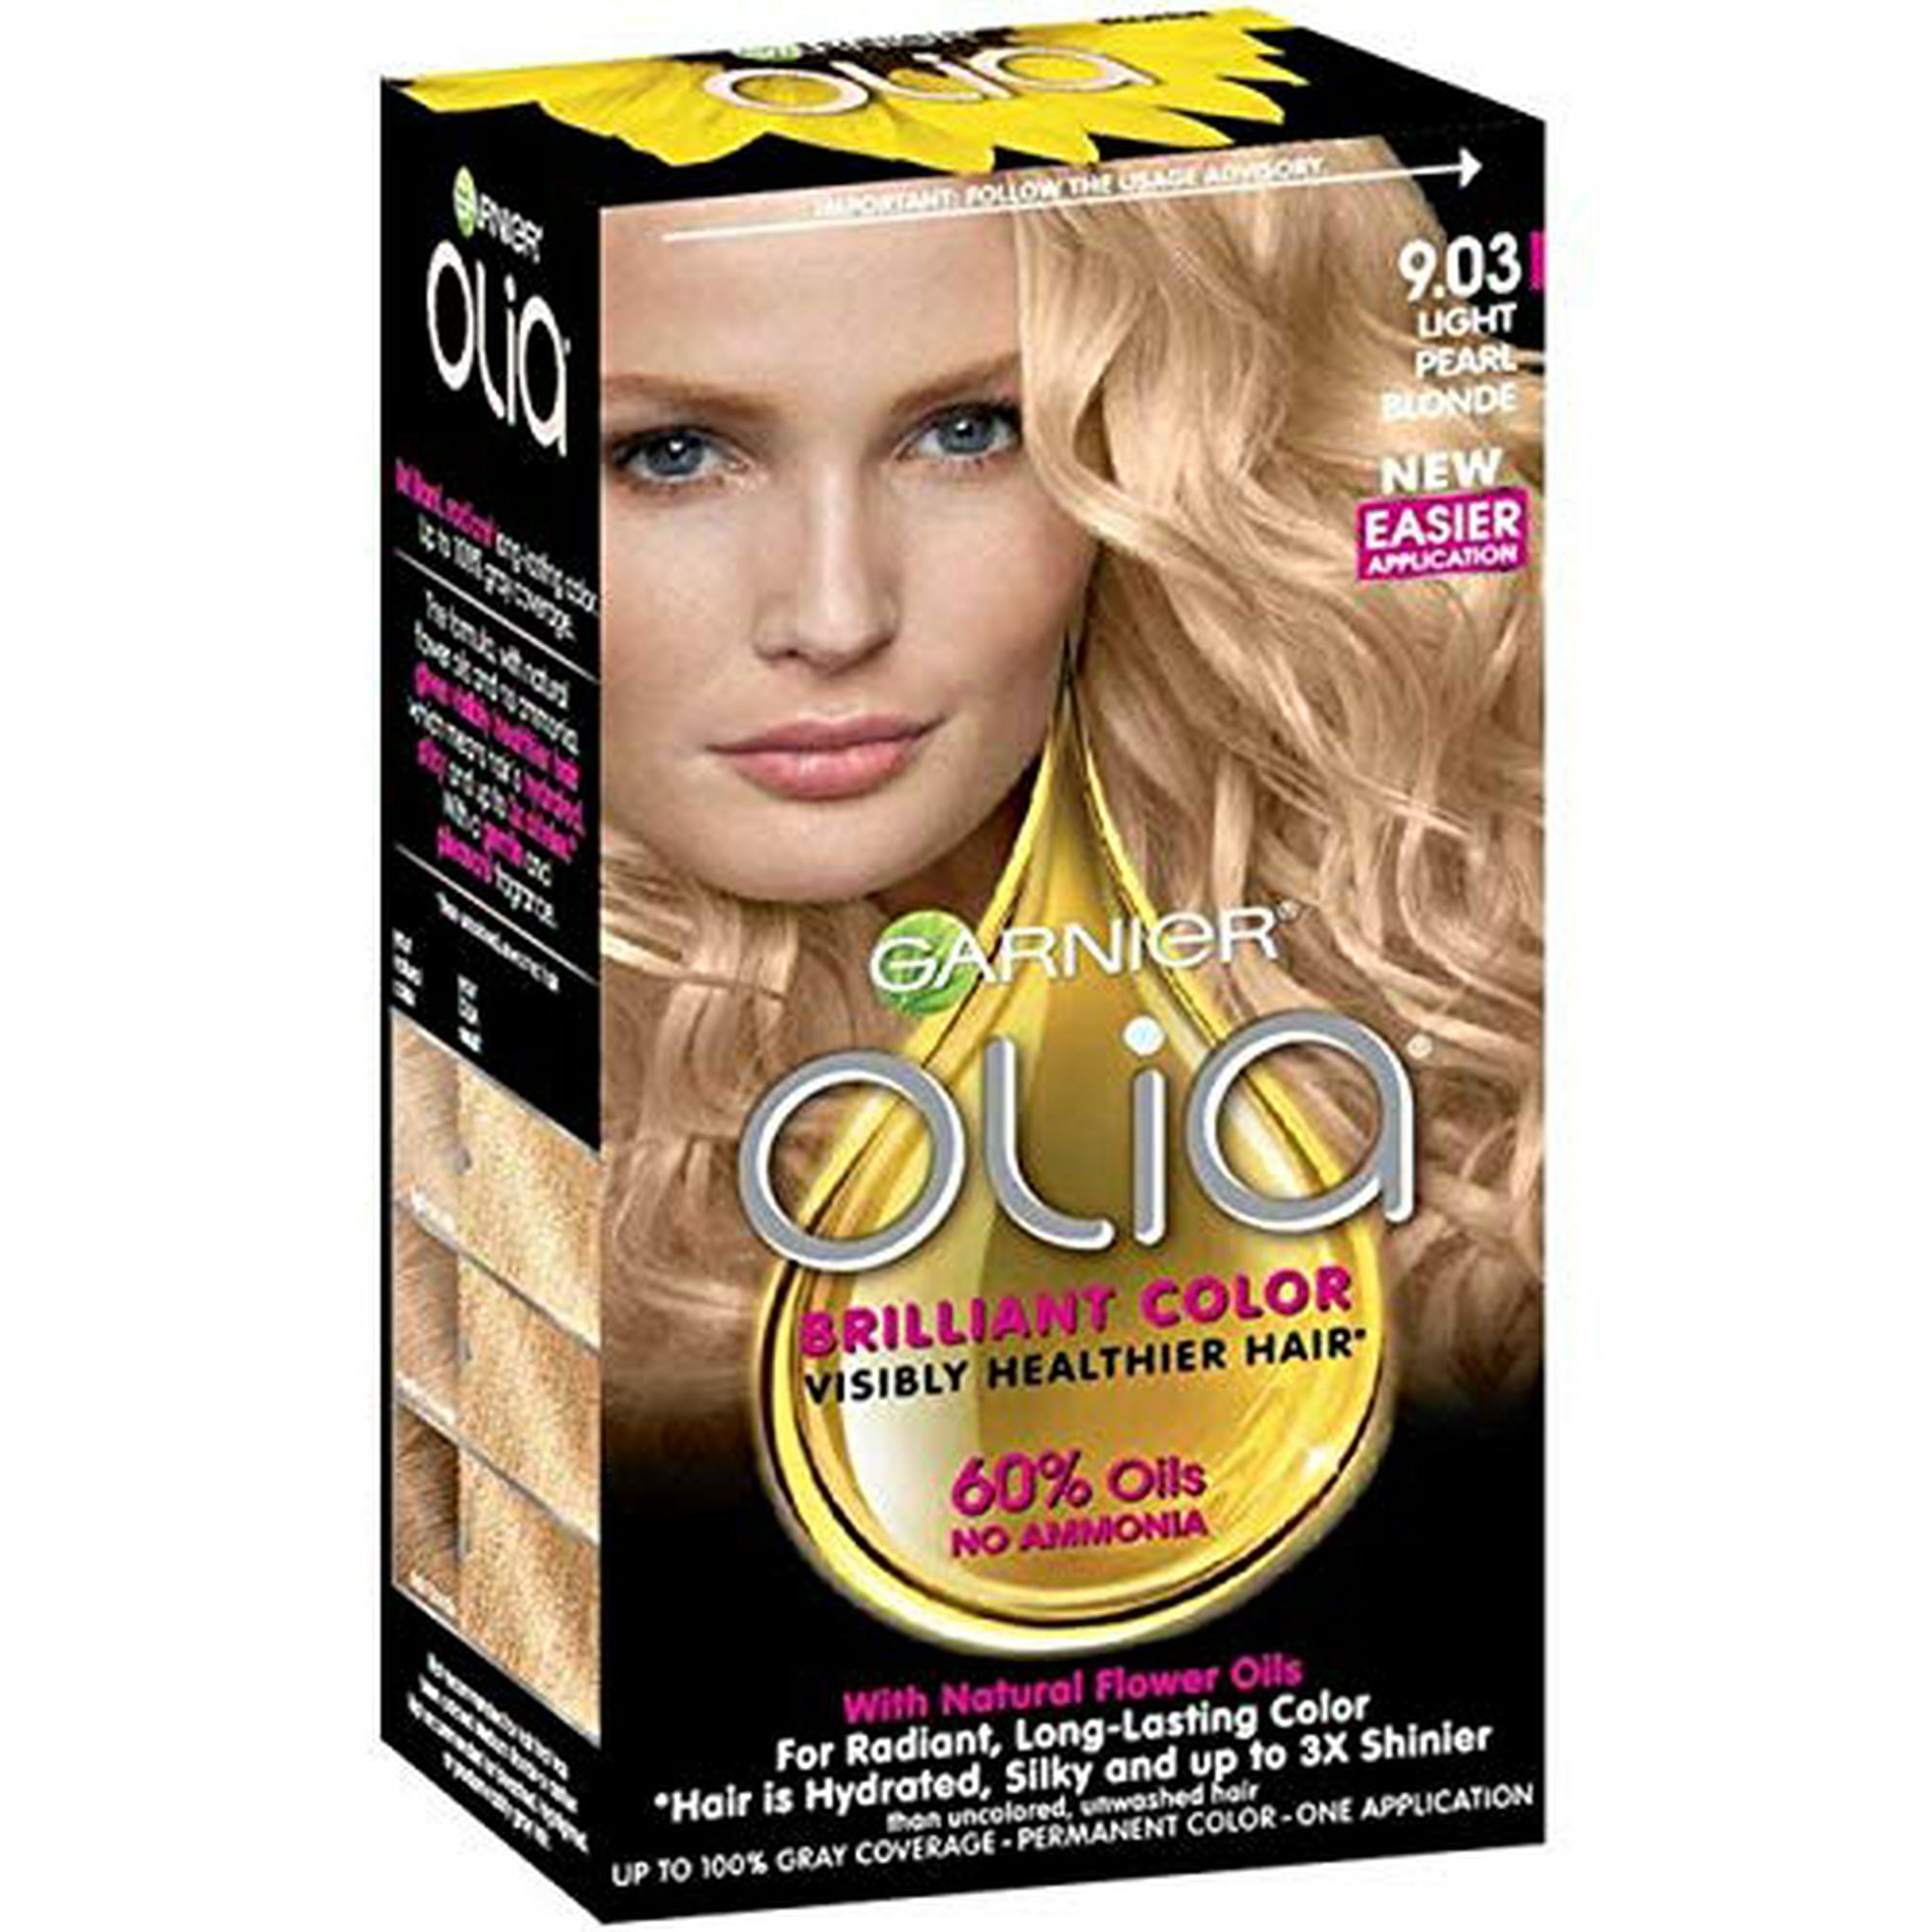 Garnier Olia Ammonia Free Permanent Hair Color 100 Percent Gray Coverage Packaging May Vary 9 03 Light Pearl Blonde Hair Dye 1 Kit Walmart Canada